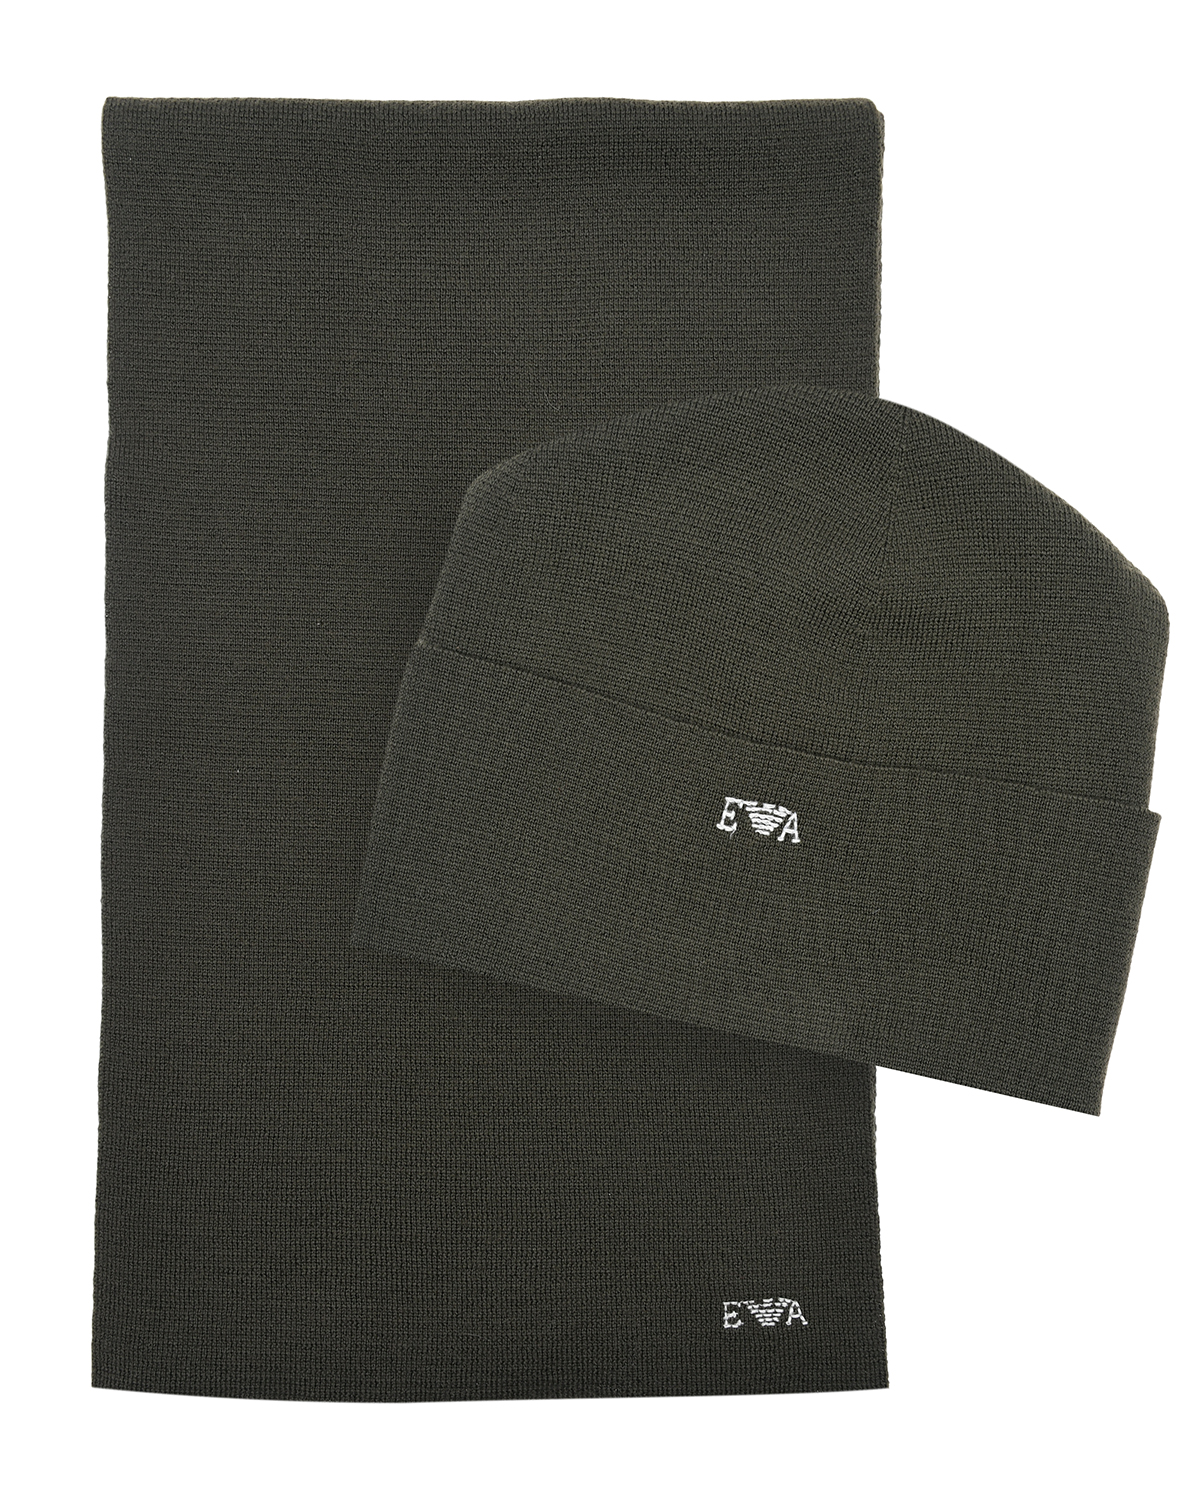 Комплект: шапка и шарф,хаки Emporio Armani детский, размер L